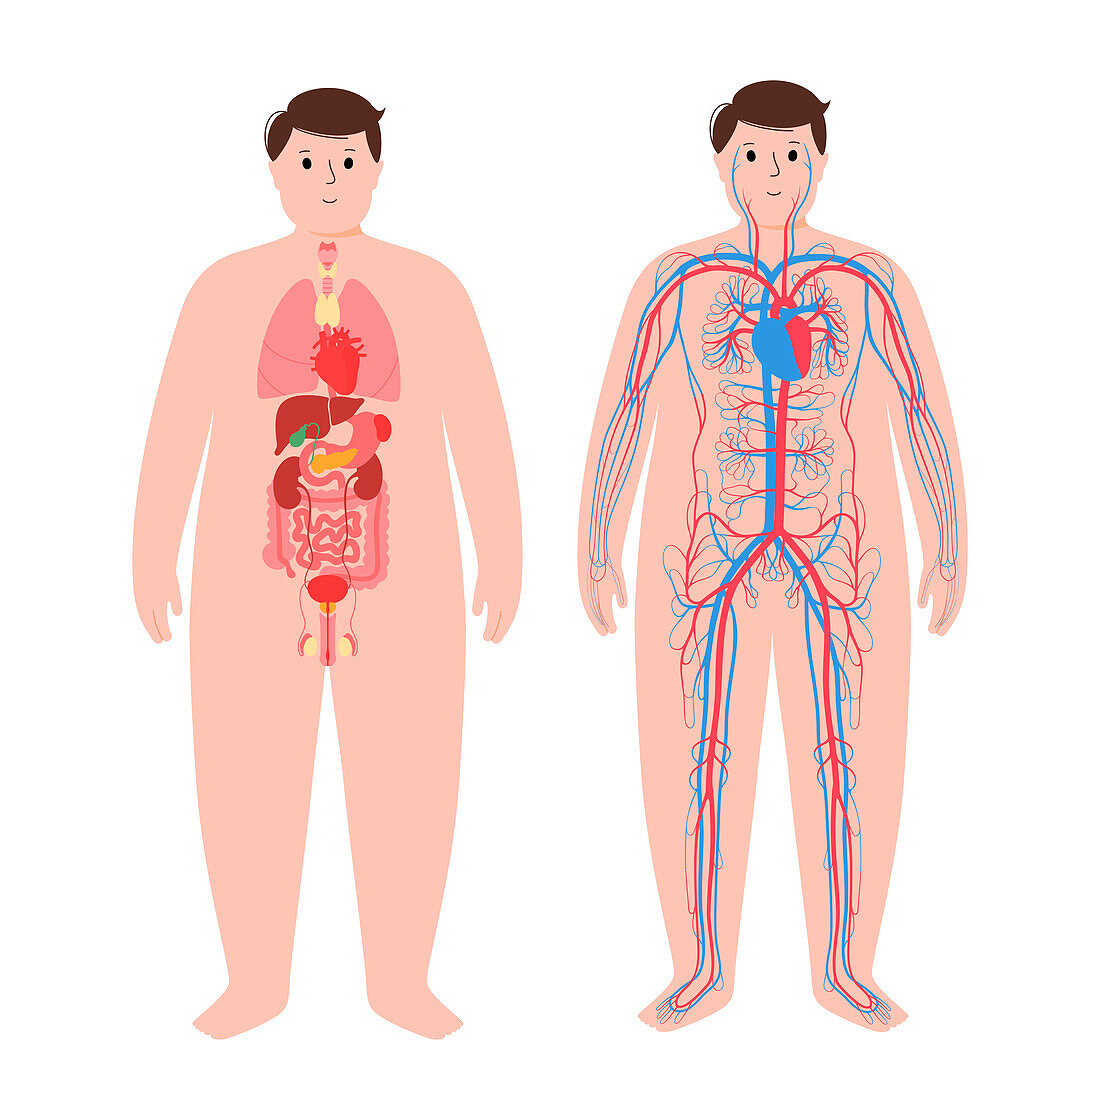 Organs and cardiovascular system, illustration